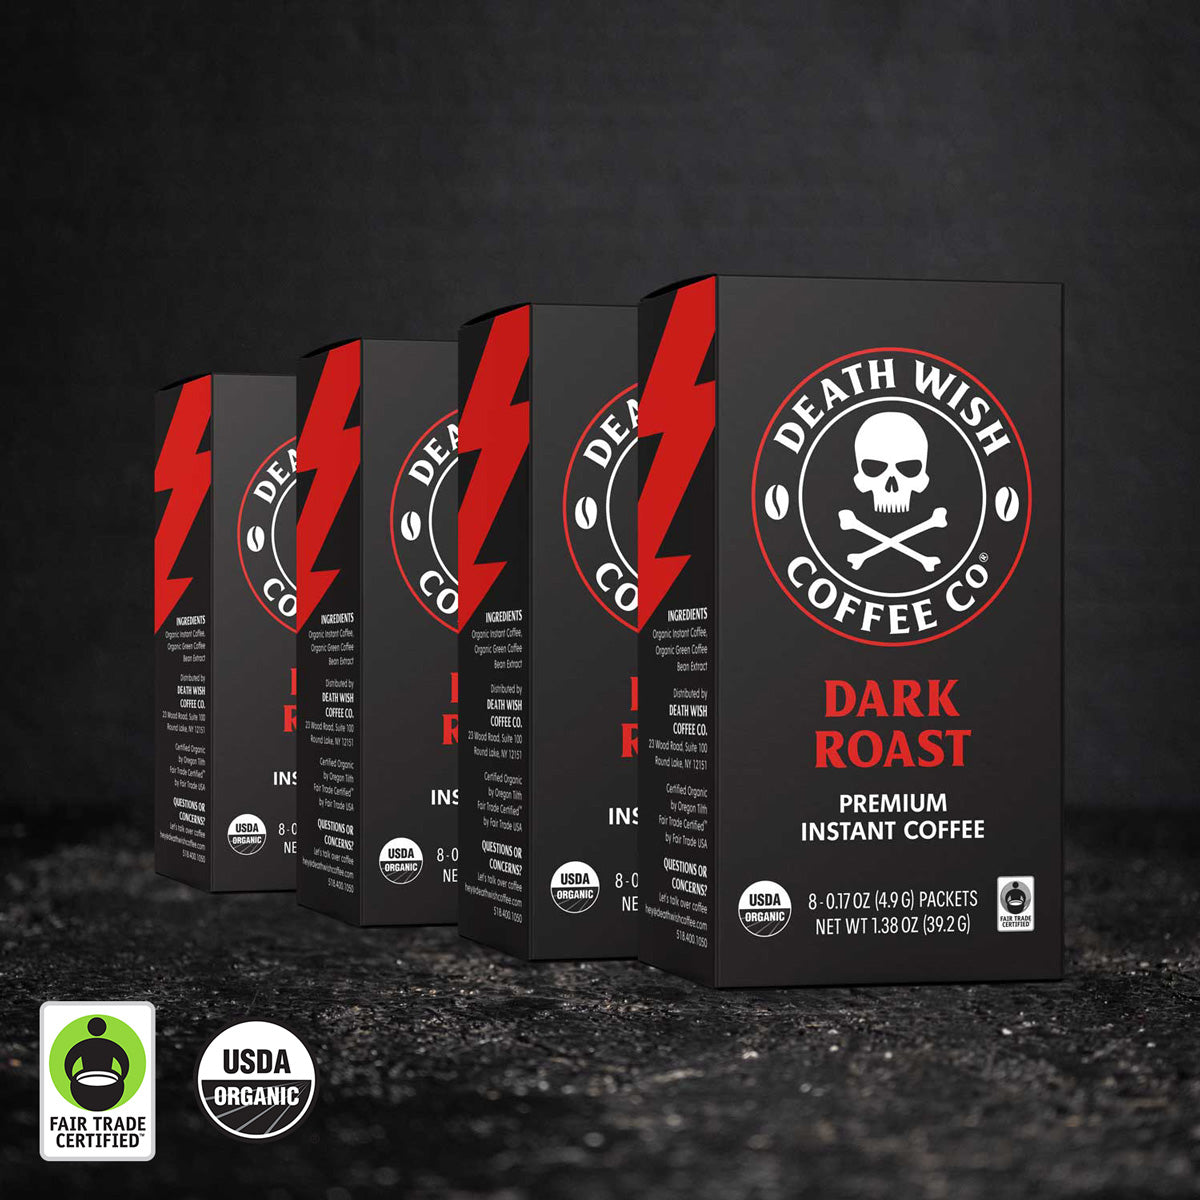 Death Wish Coffee Dark Roast Premium Instant Coffee - 32 Count